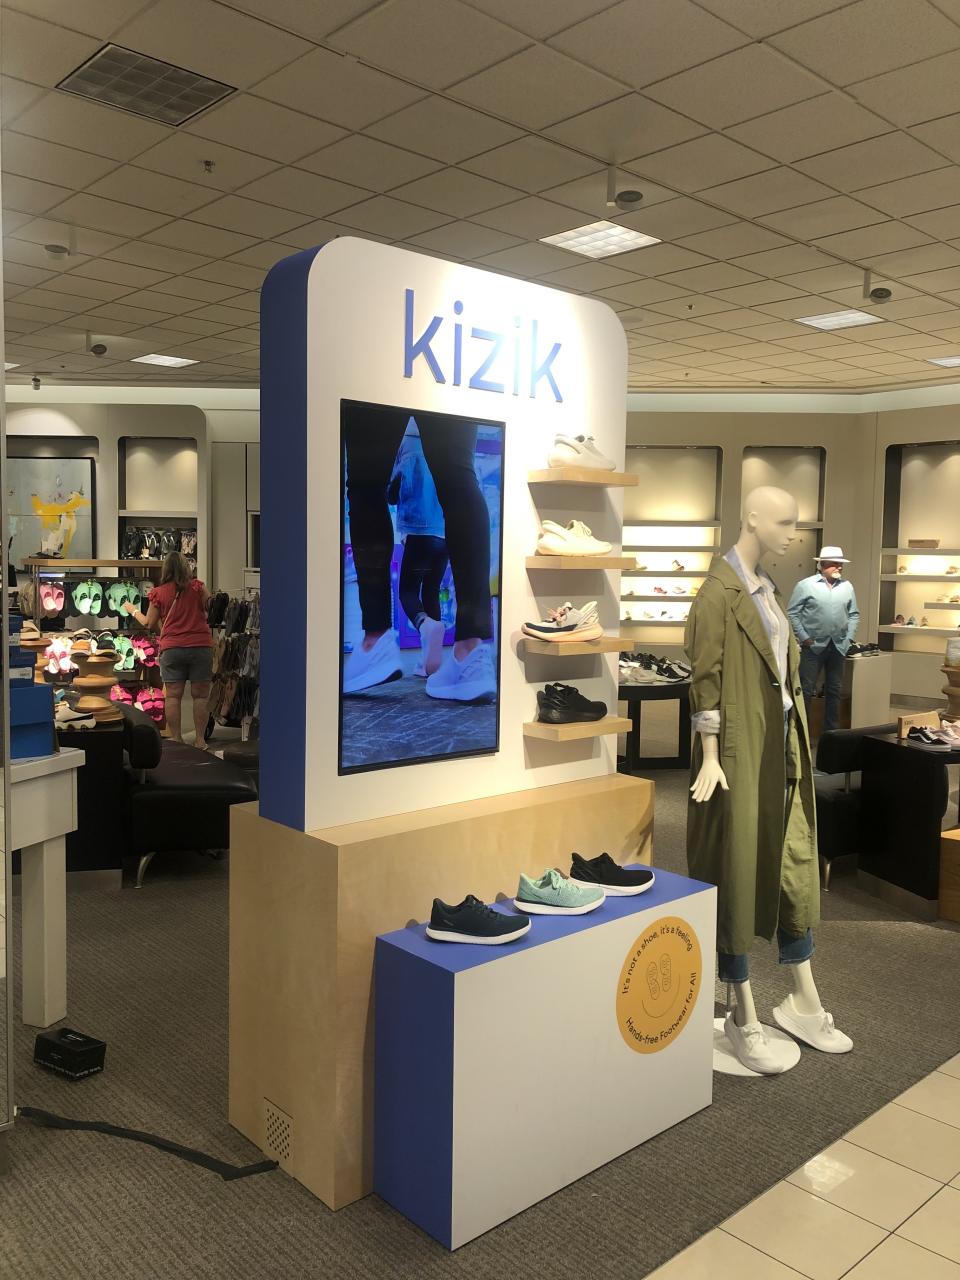 The Kizik display at Nordstrom.